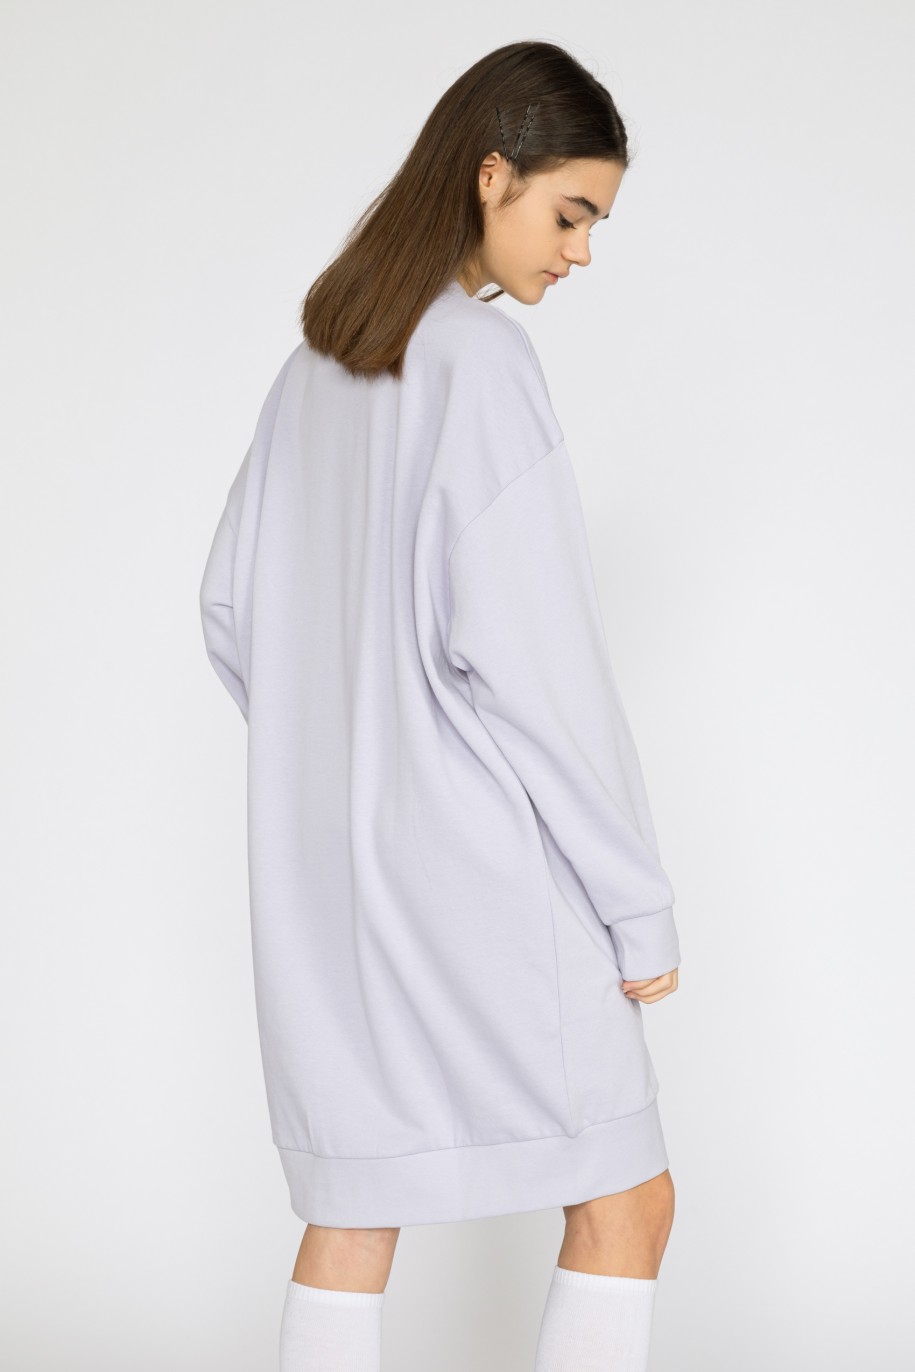 Liliowa bluzowa sukienka  SNOWBOARD - 32316